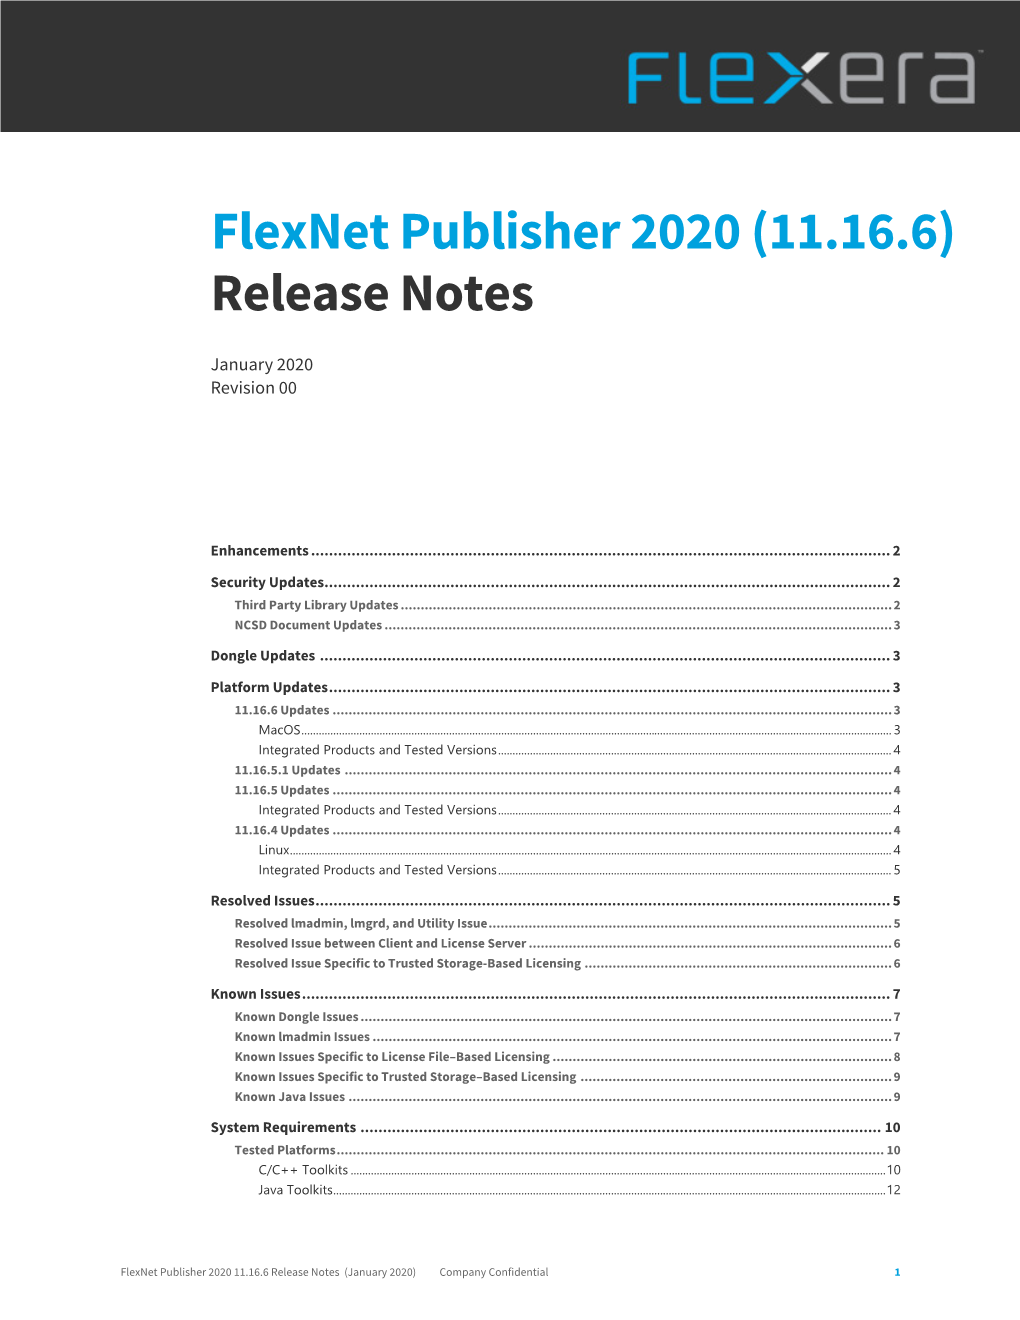 Flexnet Publisher 2020 (11.16.6) Release Notes